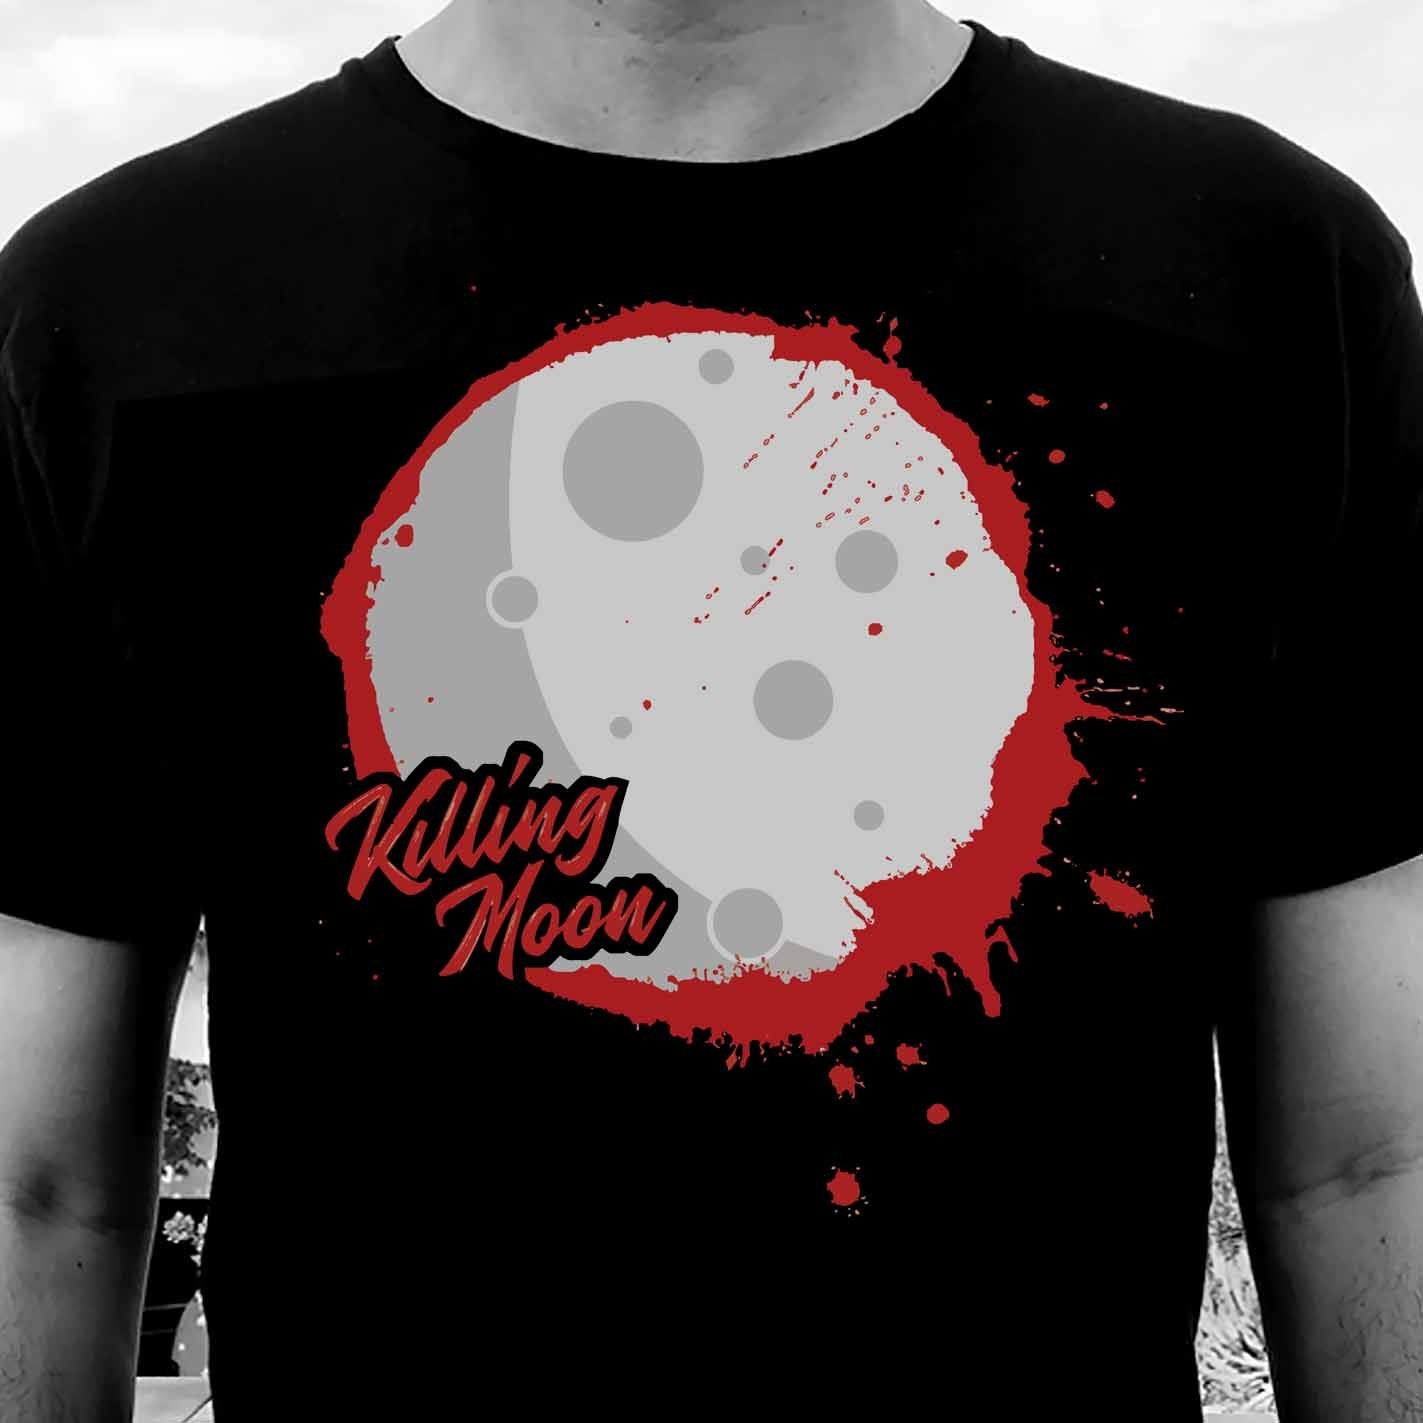 Camiseta Killing Moon del Grupo de Música Echo & the Bunnymen